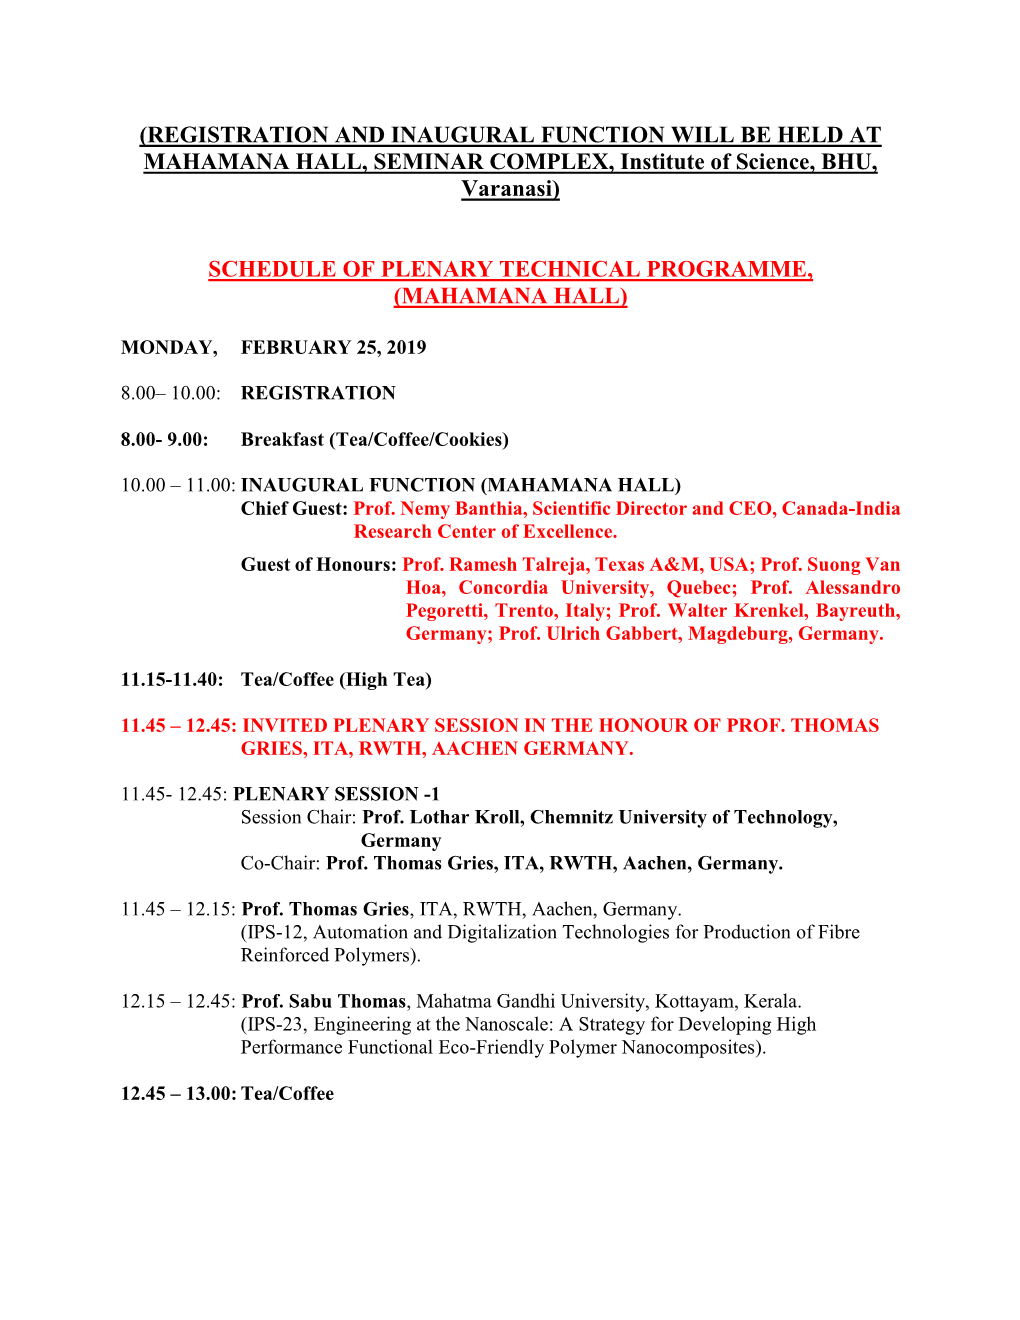 Technical Programme, (Mahamana Hall)